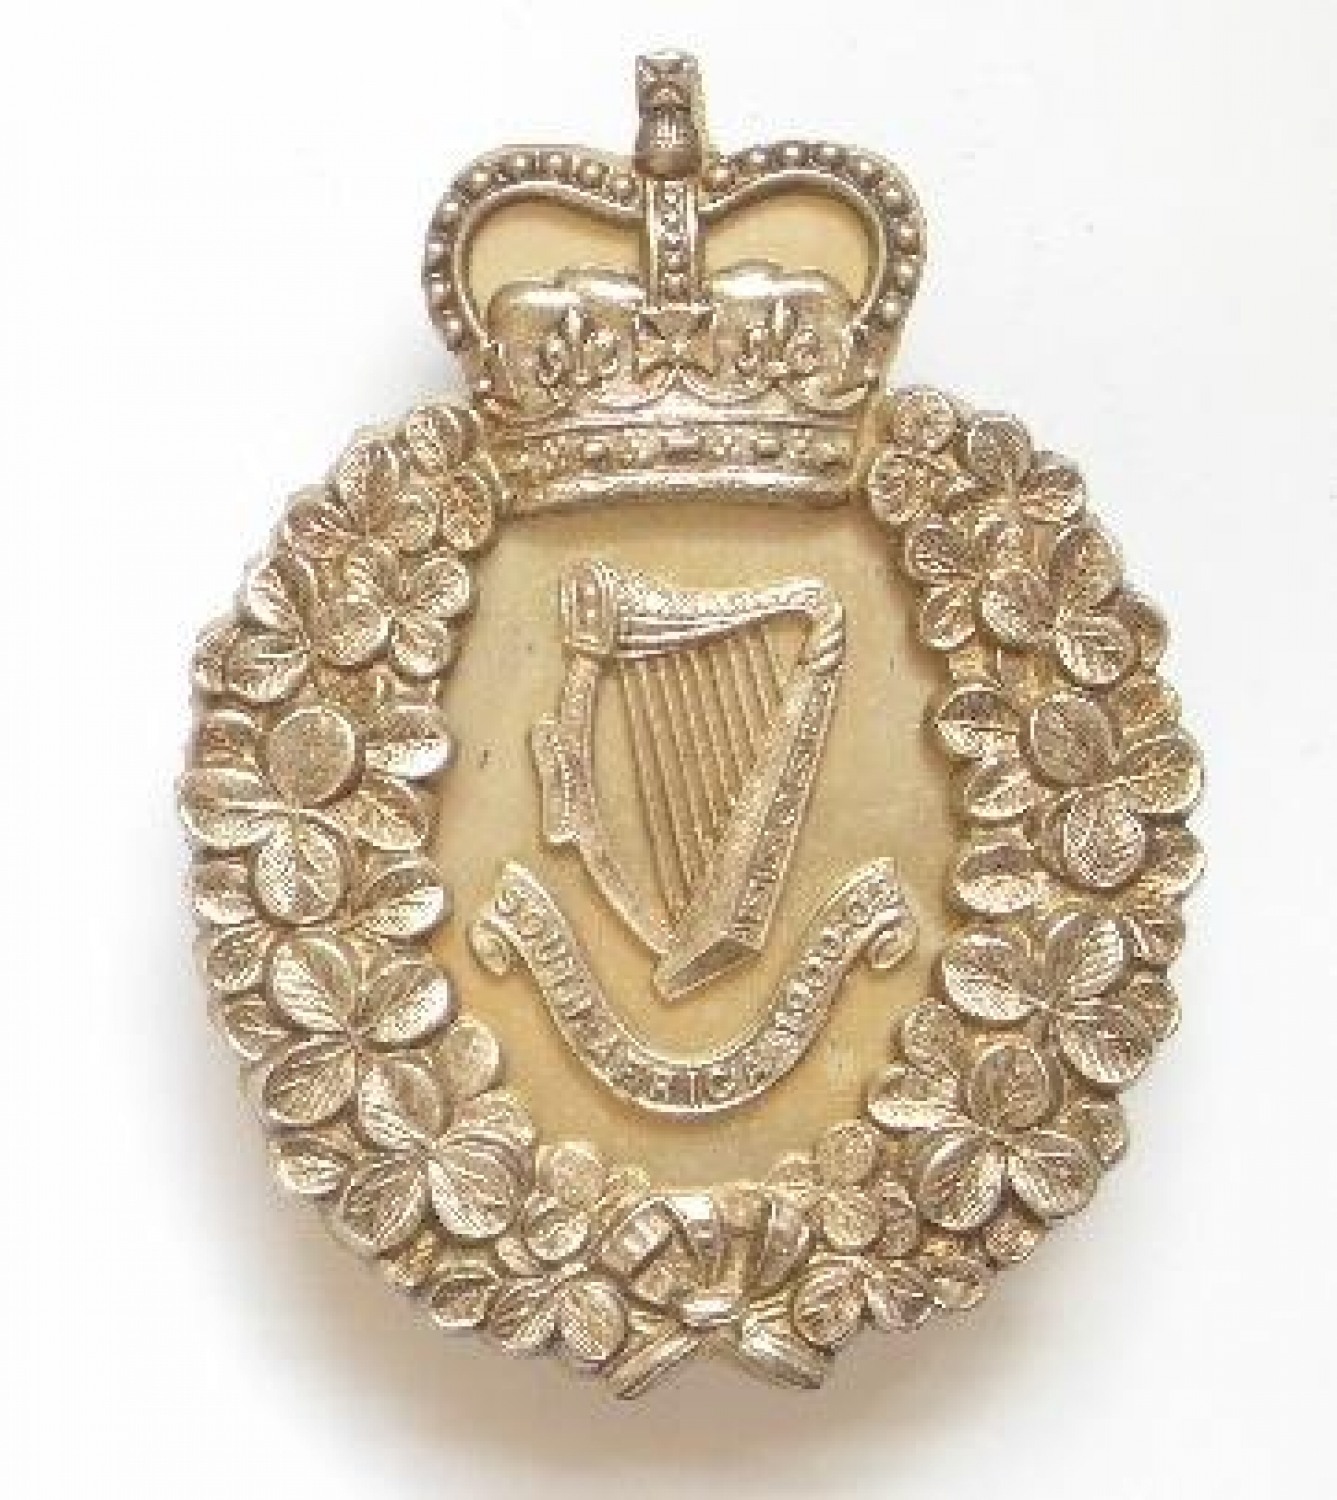 London Irish Rifles silver pouch belt plate